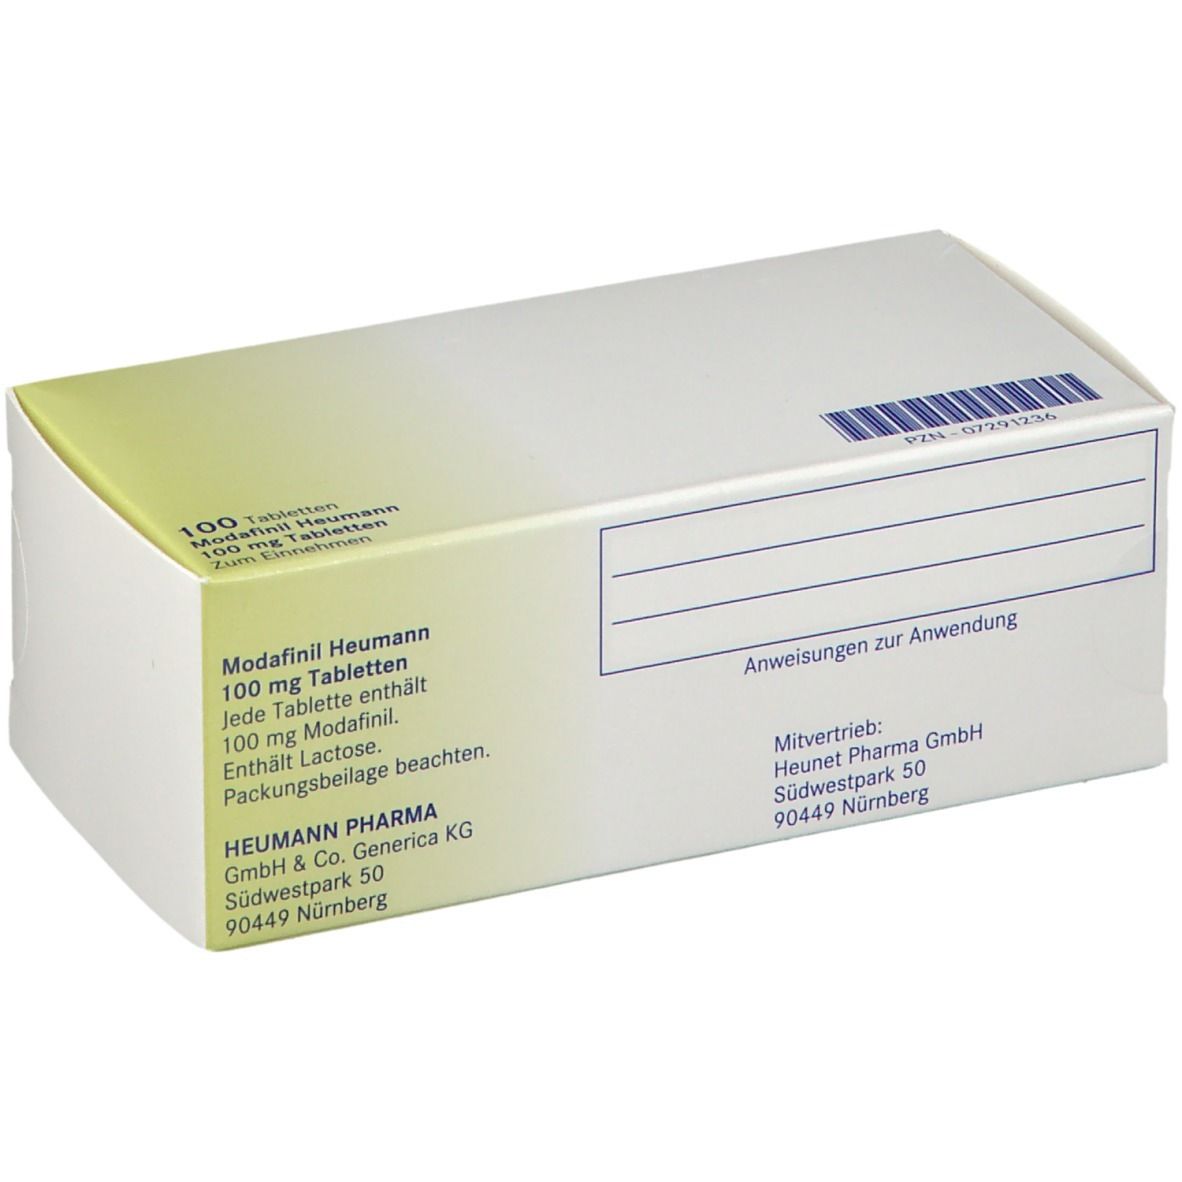 Modafinil Heumann 100 mg